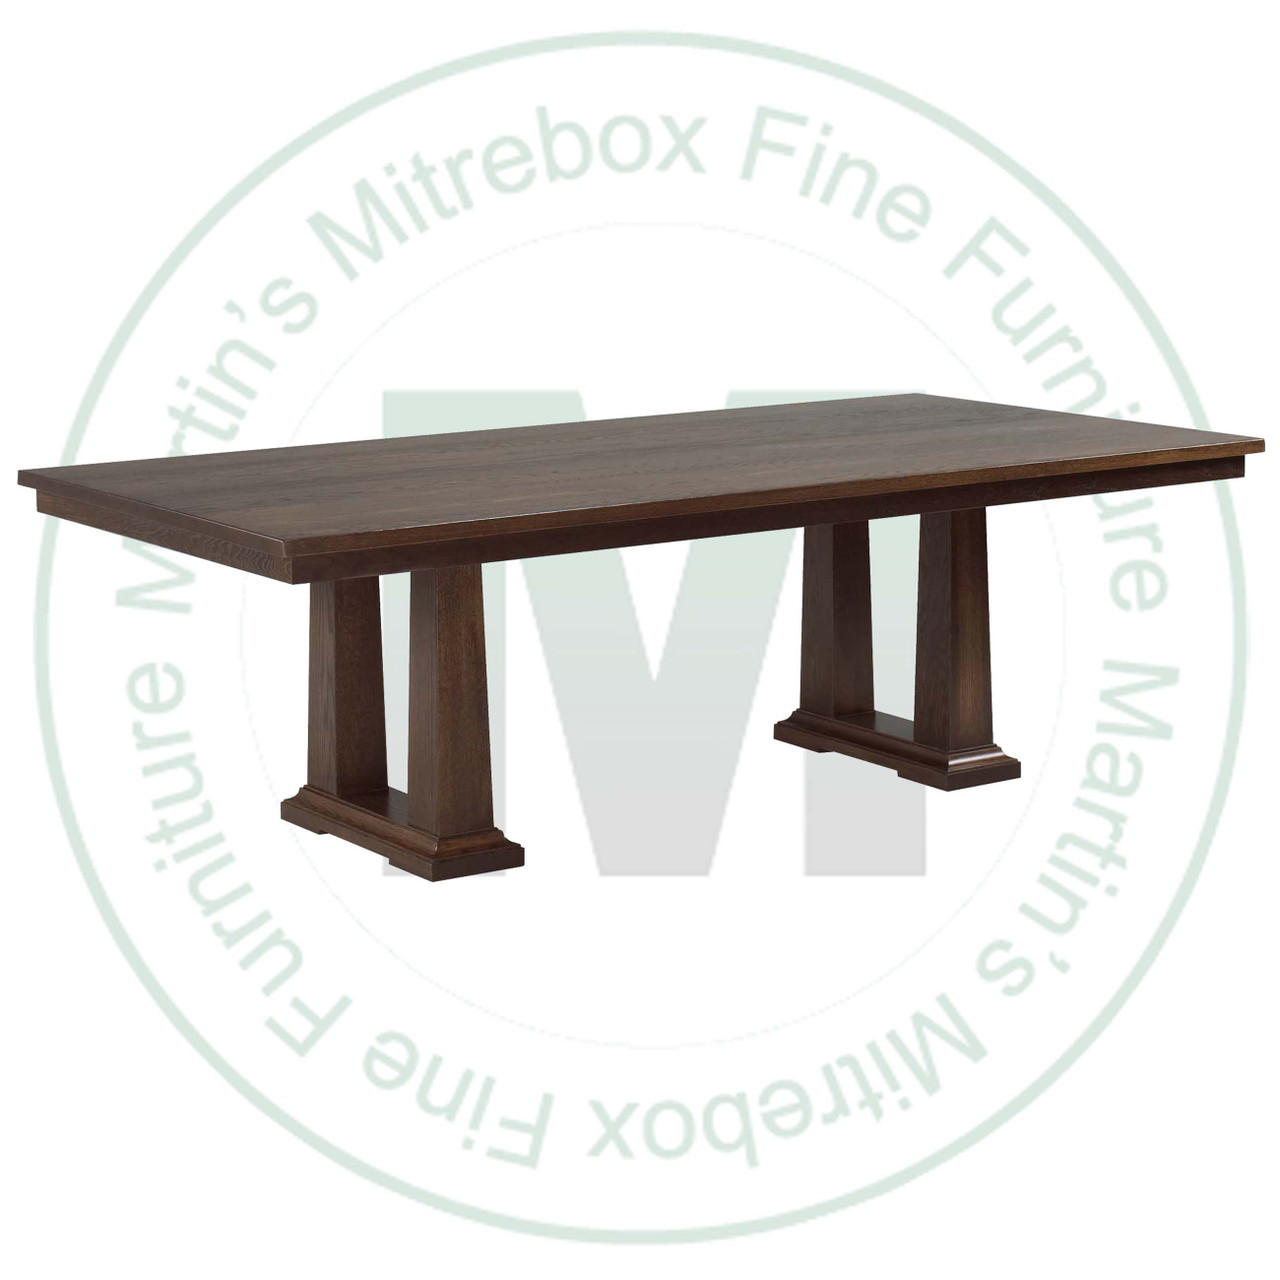 Oak Acropolis Solid Top Double Pedestal Table 48''D x 72''W x 30''H Table Has 1.25'' Thick Top